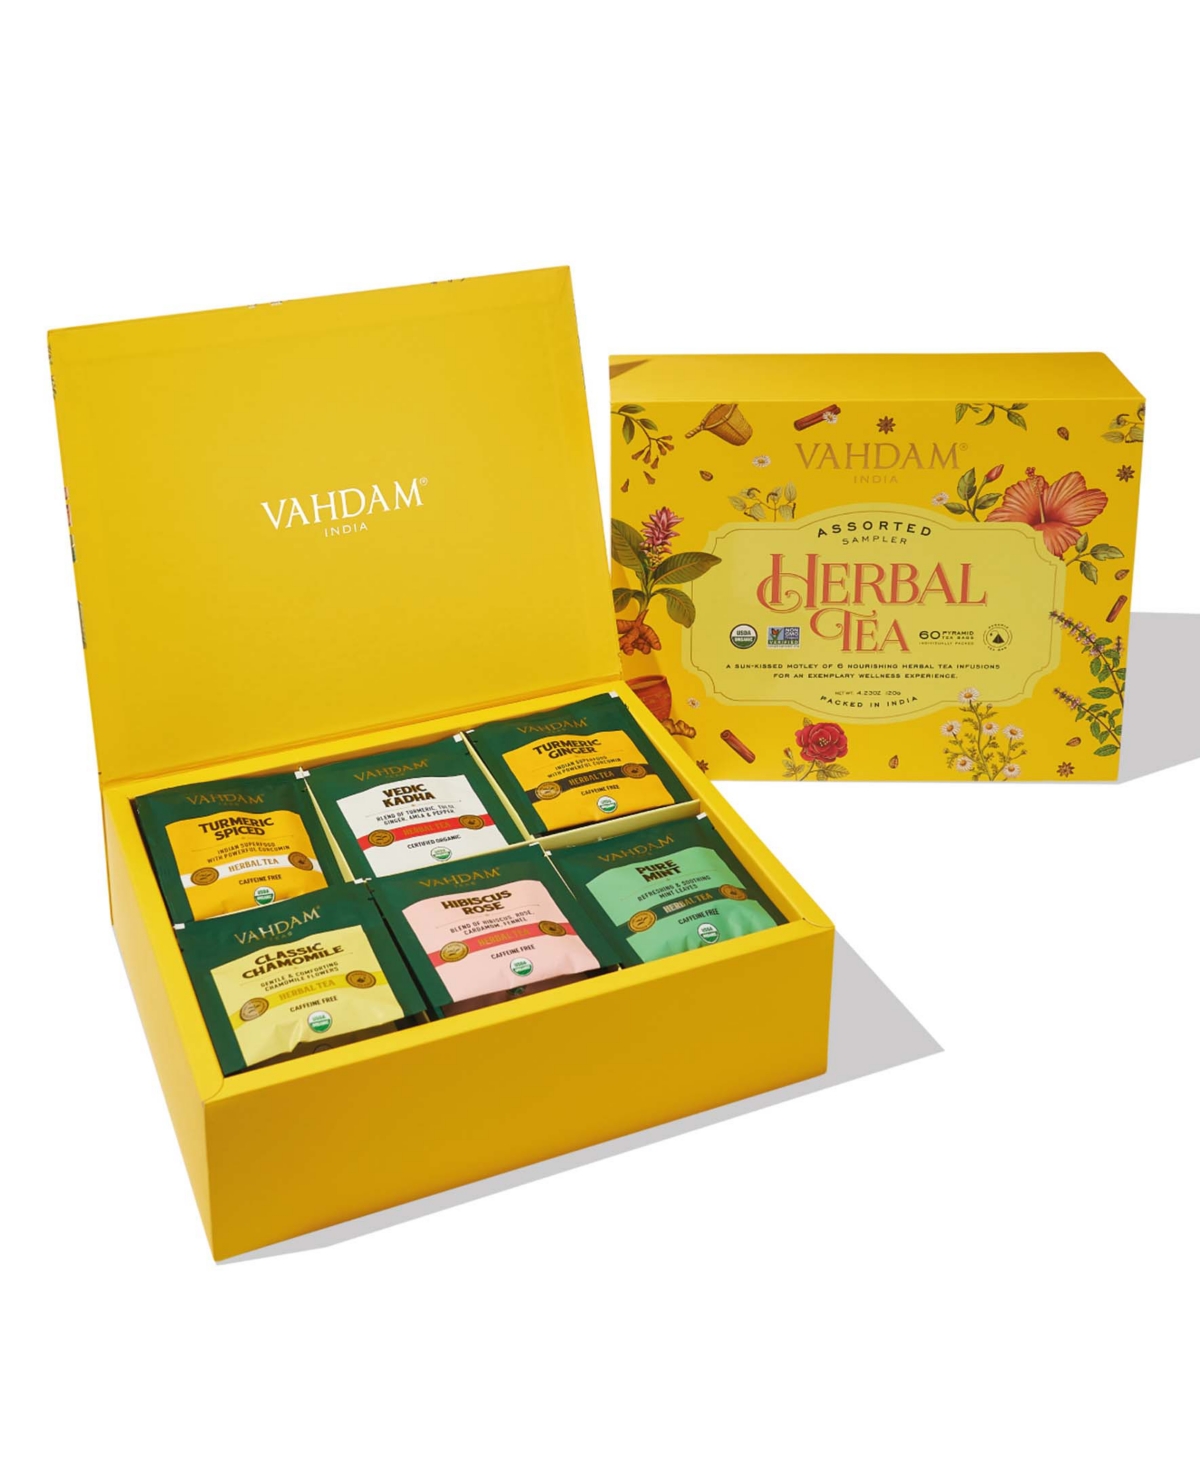 Vahdam Teas Herbal Tea Variety Sampler Gift Set, 60 Long Leaf Pyramid Tea Bags